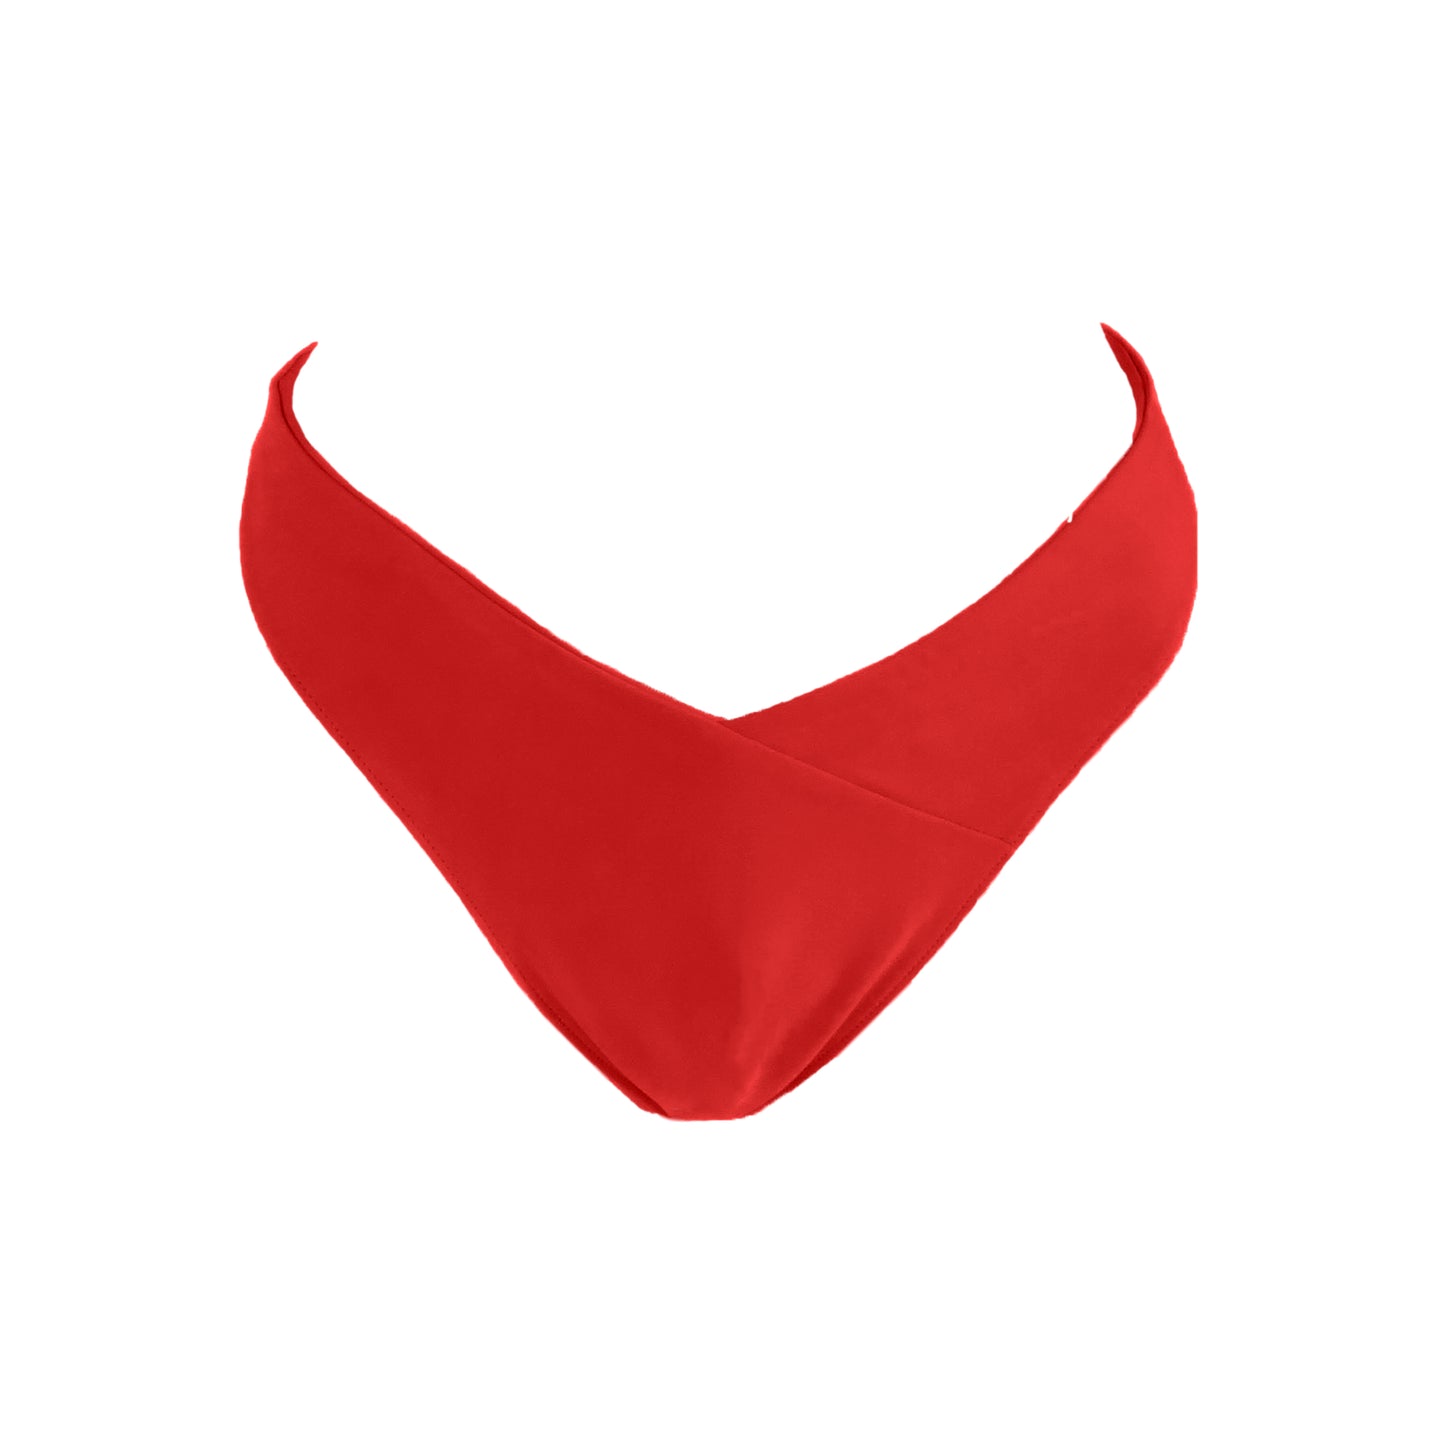 Red v shape mid rise bikini bottom with asymmetric seam detail, high cut sides and cheeky bum coverage.